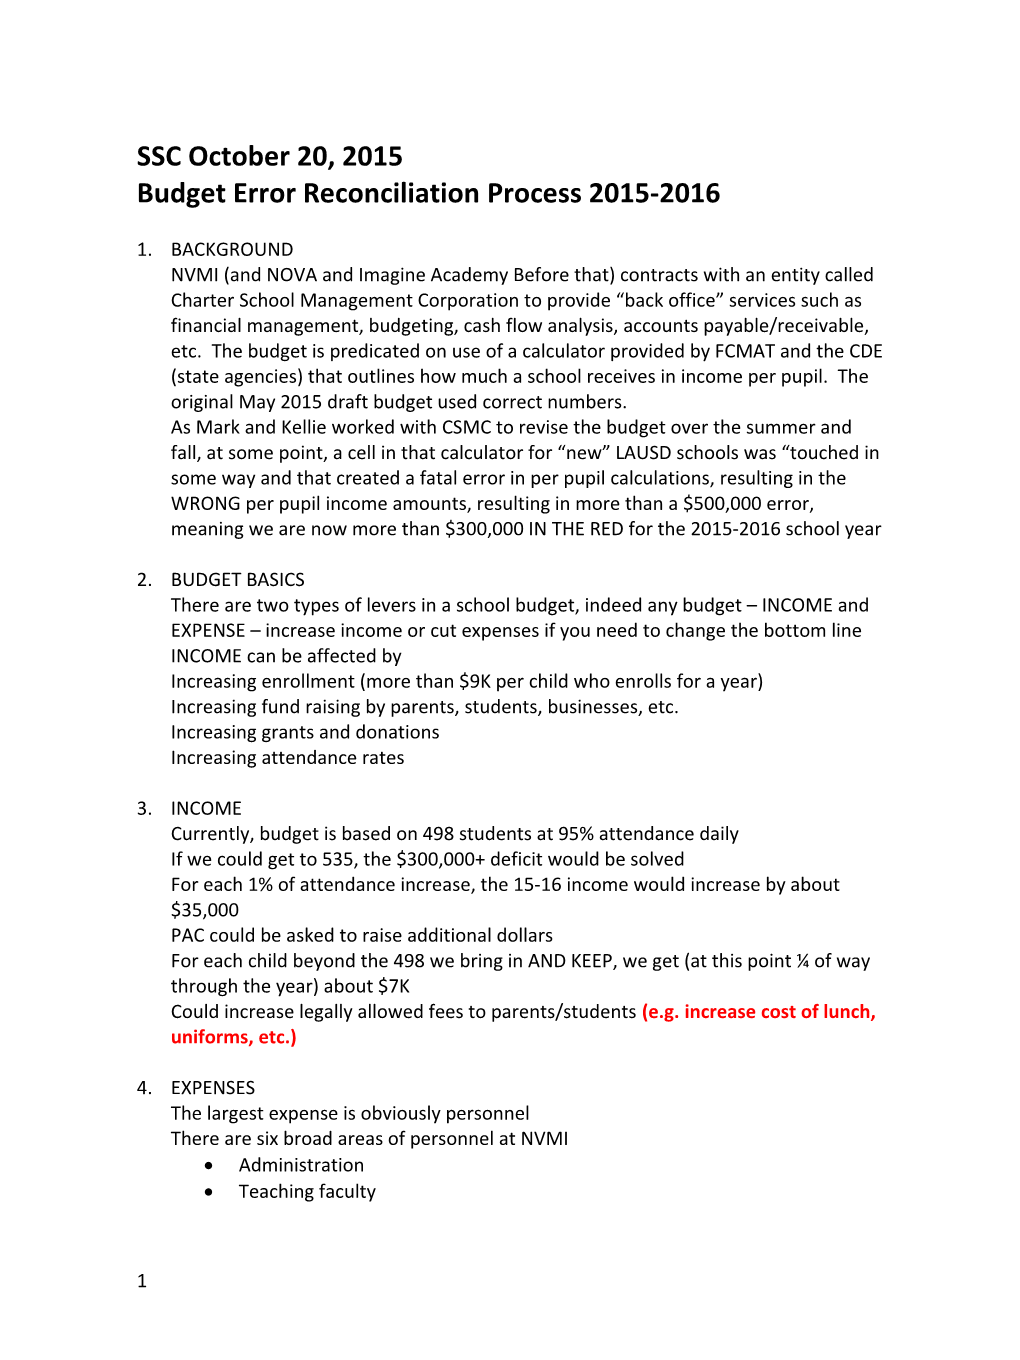 Budget Error Reconciliation Process 2015-2016